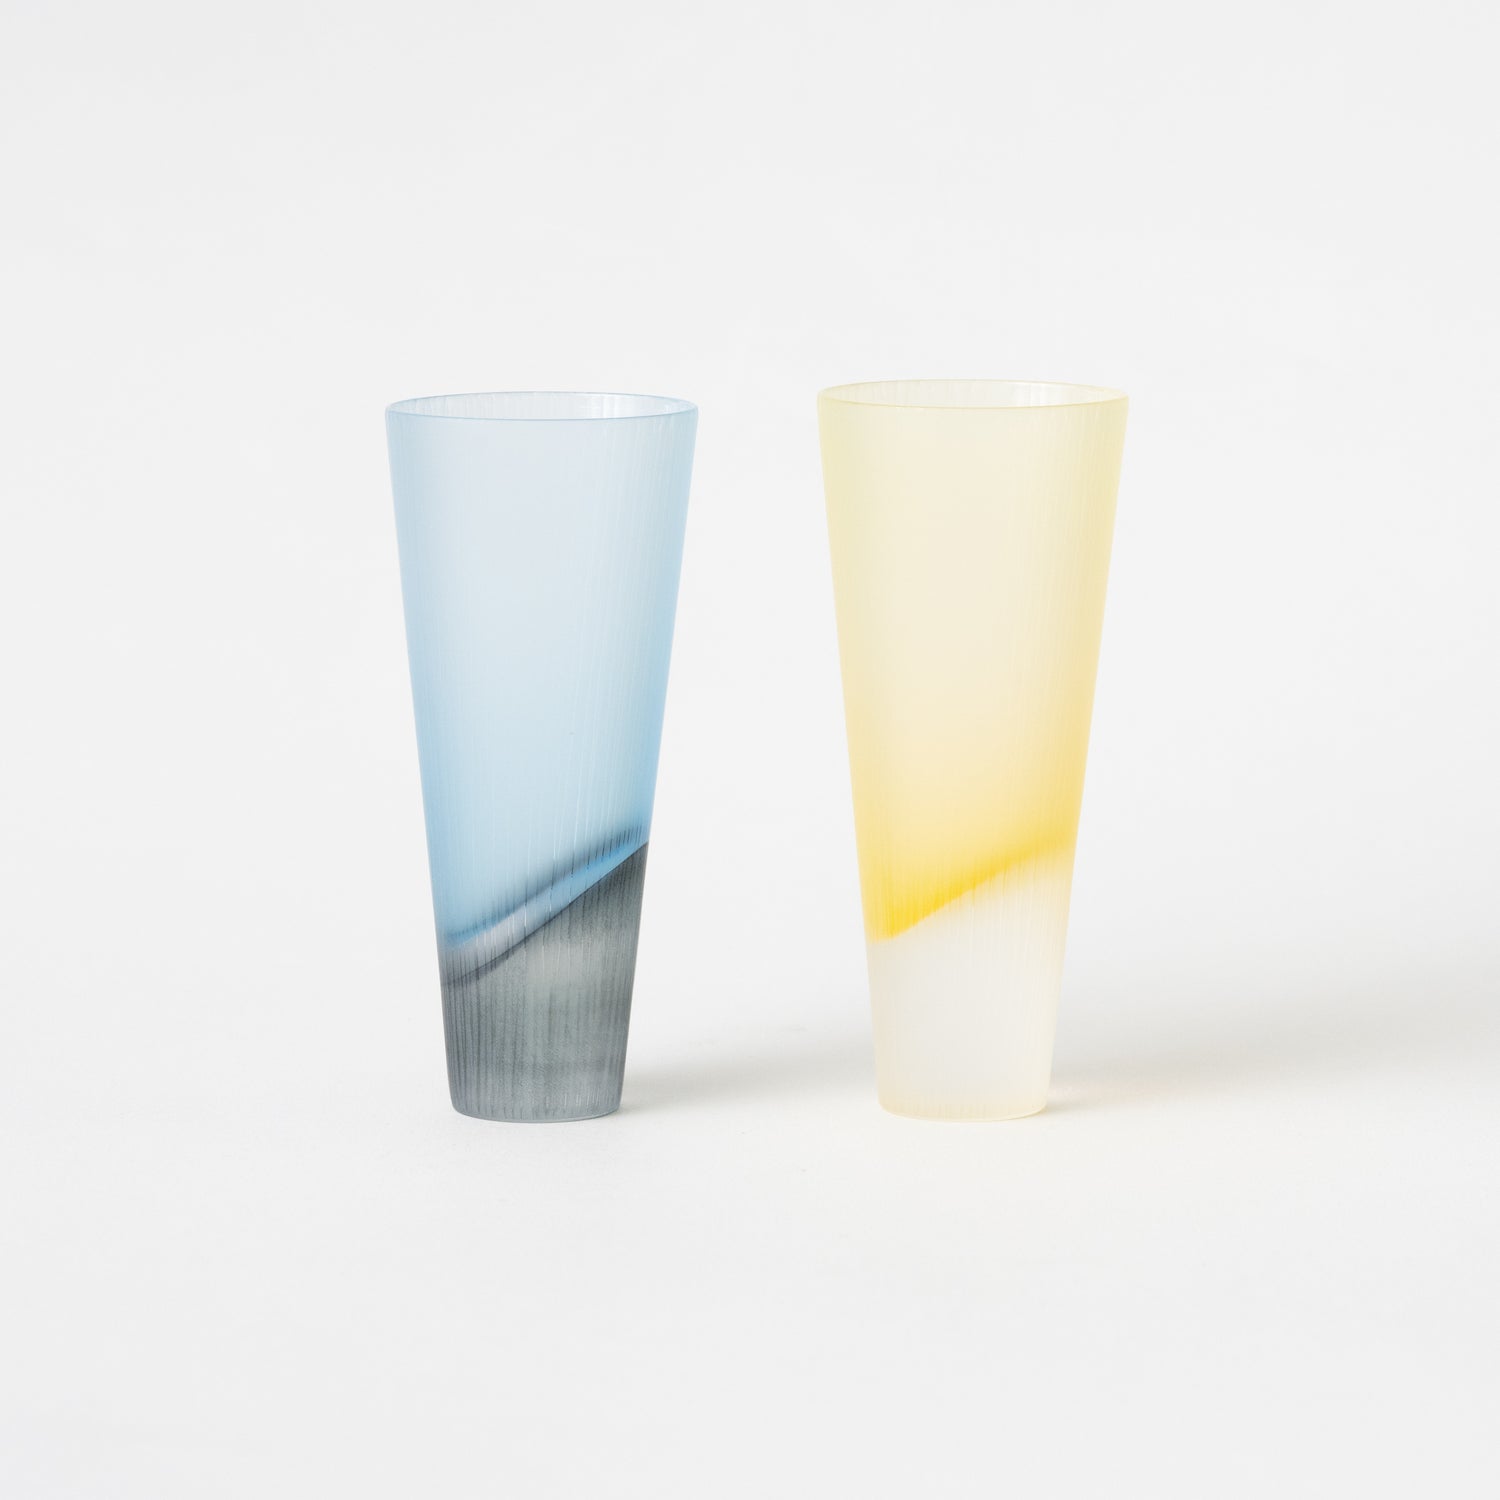 Silence Glass / Takeyoshi Mitsui